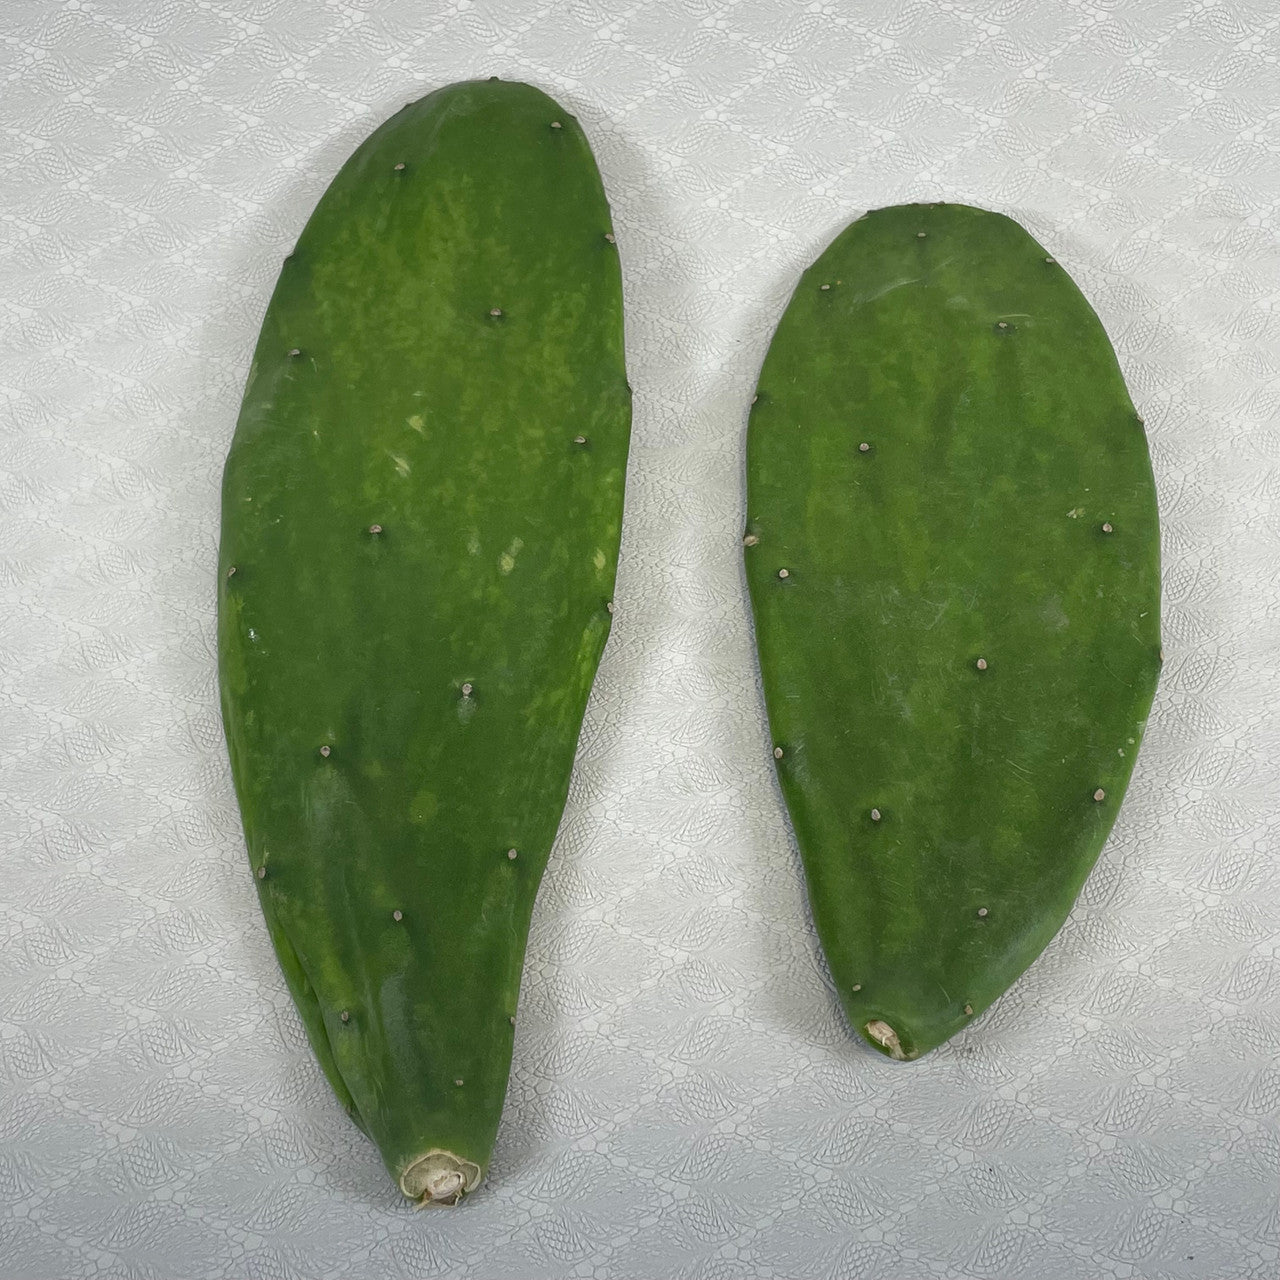 Opuntia Cochenillifera Pads (Prickly Pear / Nopales) - 3 Pack